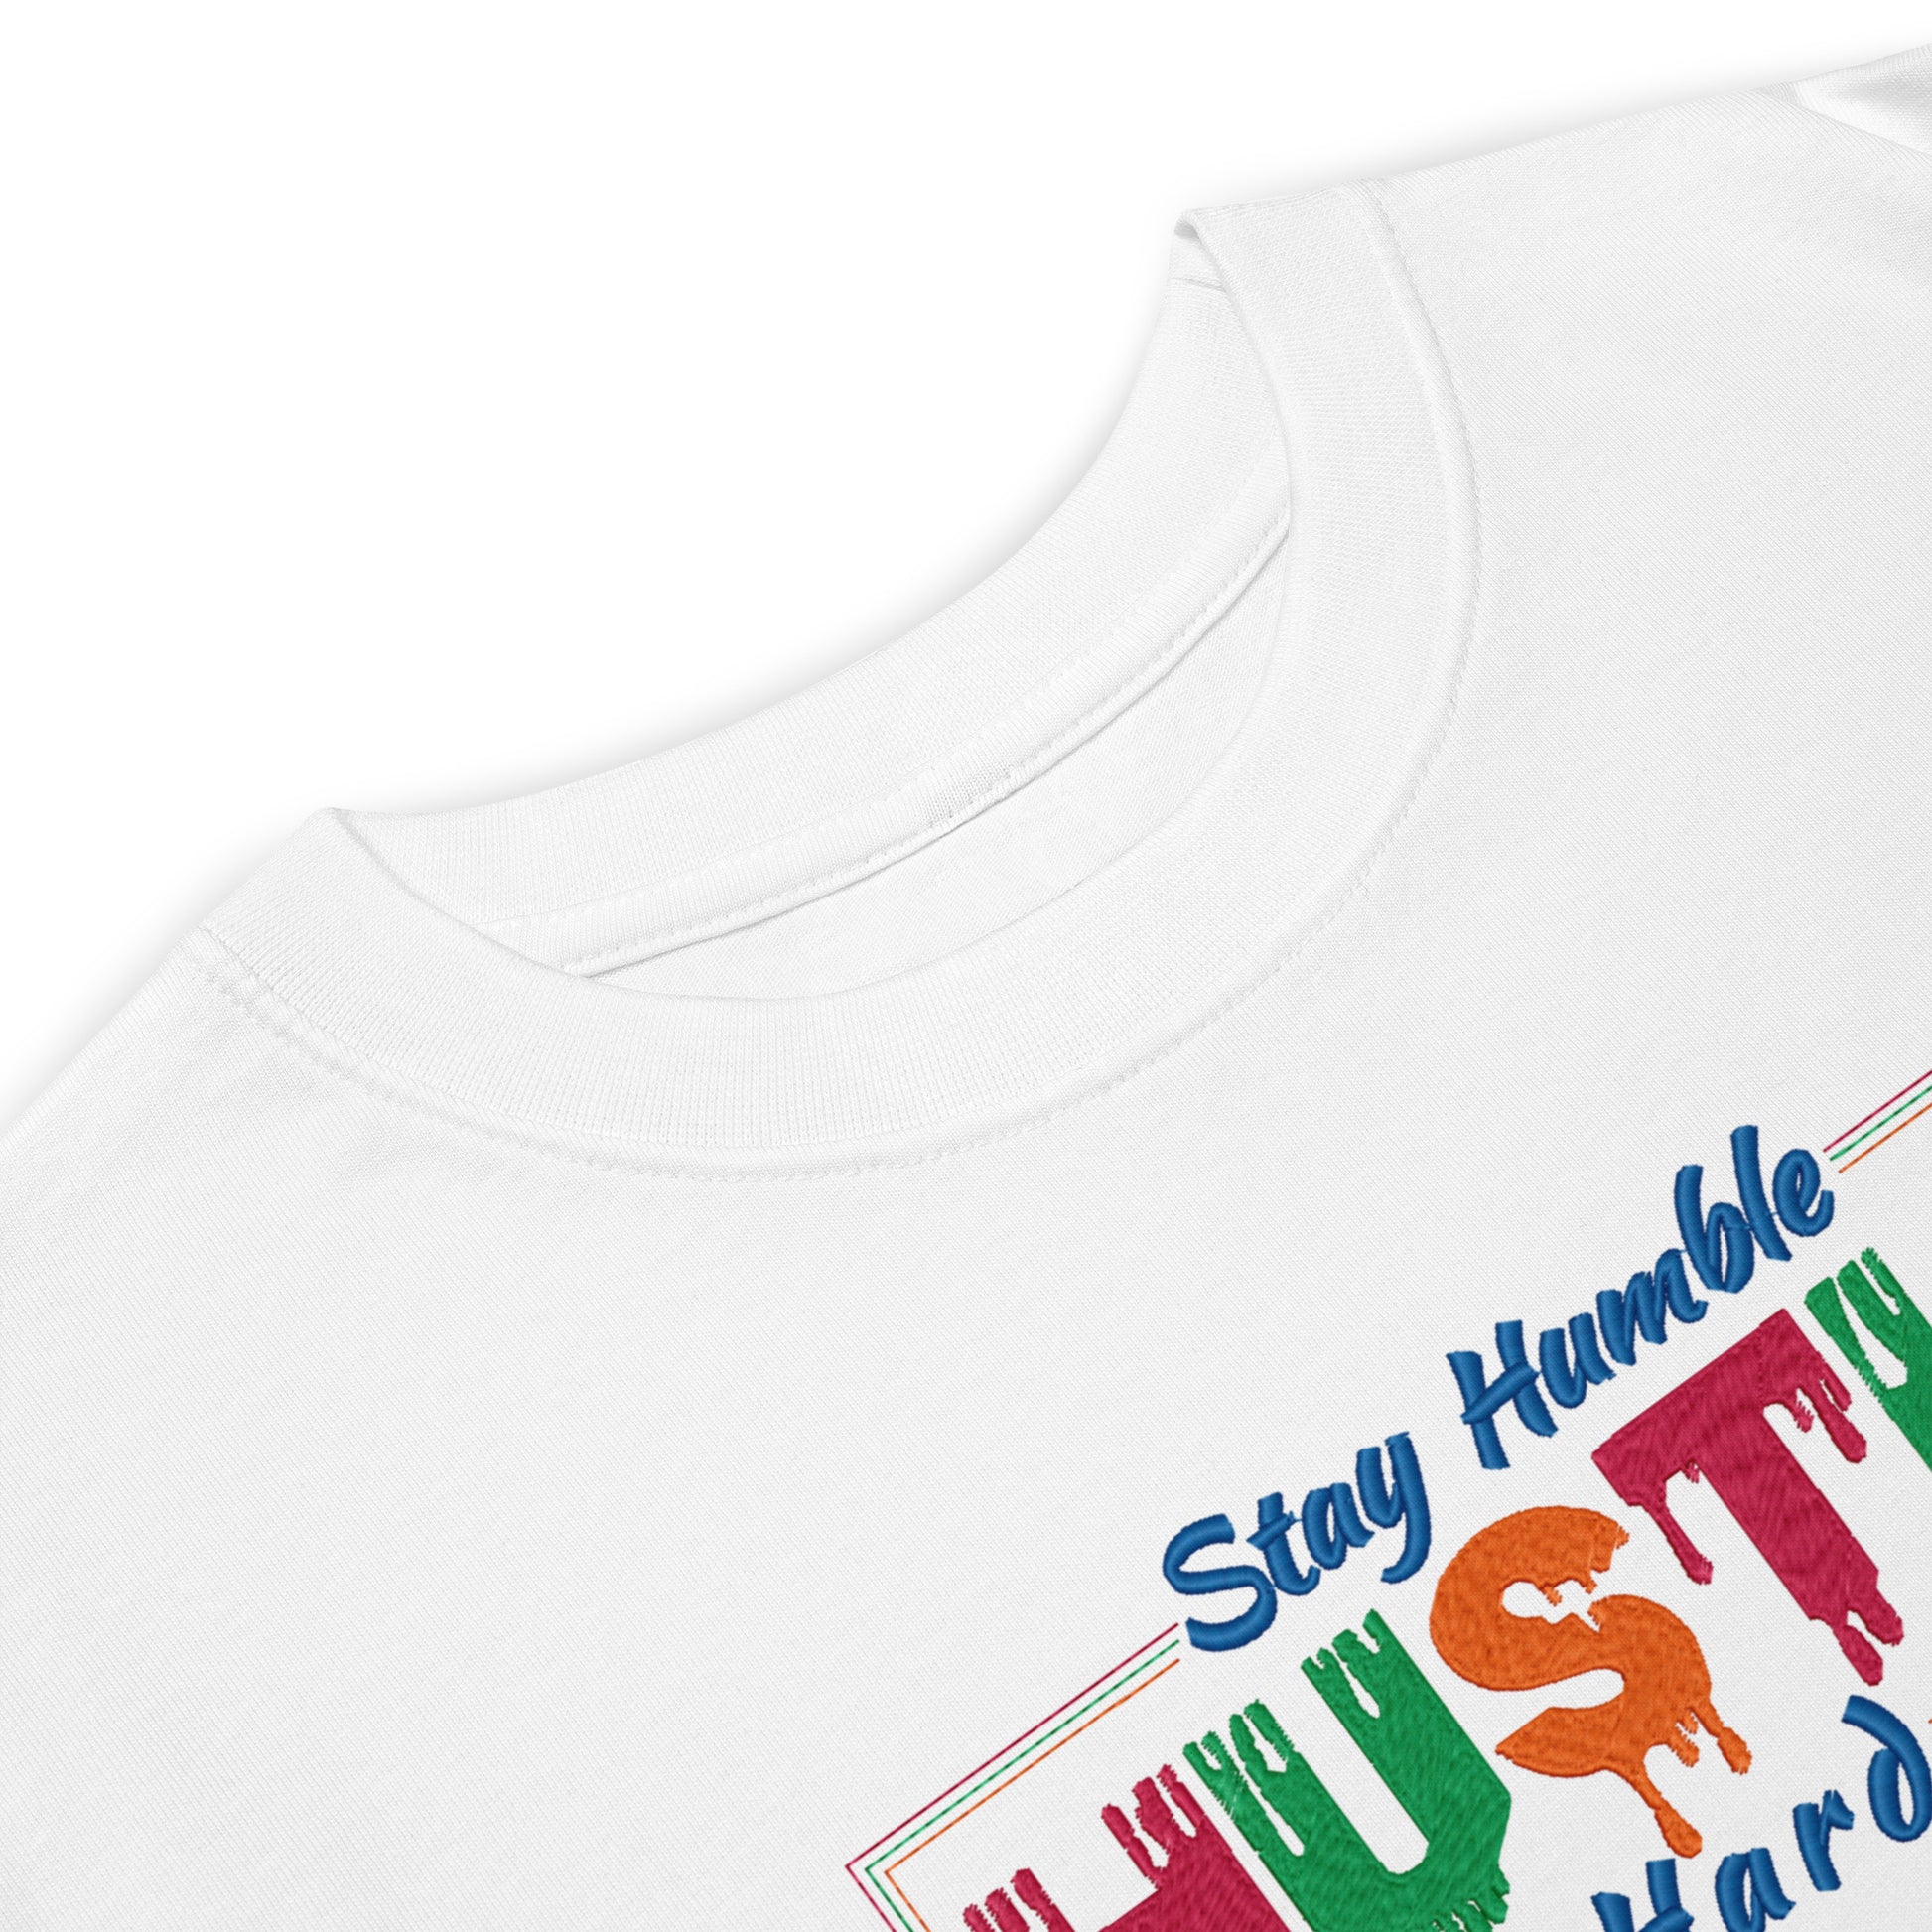 Stay Hamble Hustle Hard GILDAN T-Shirt - Magandato